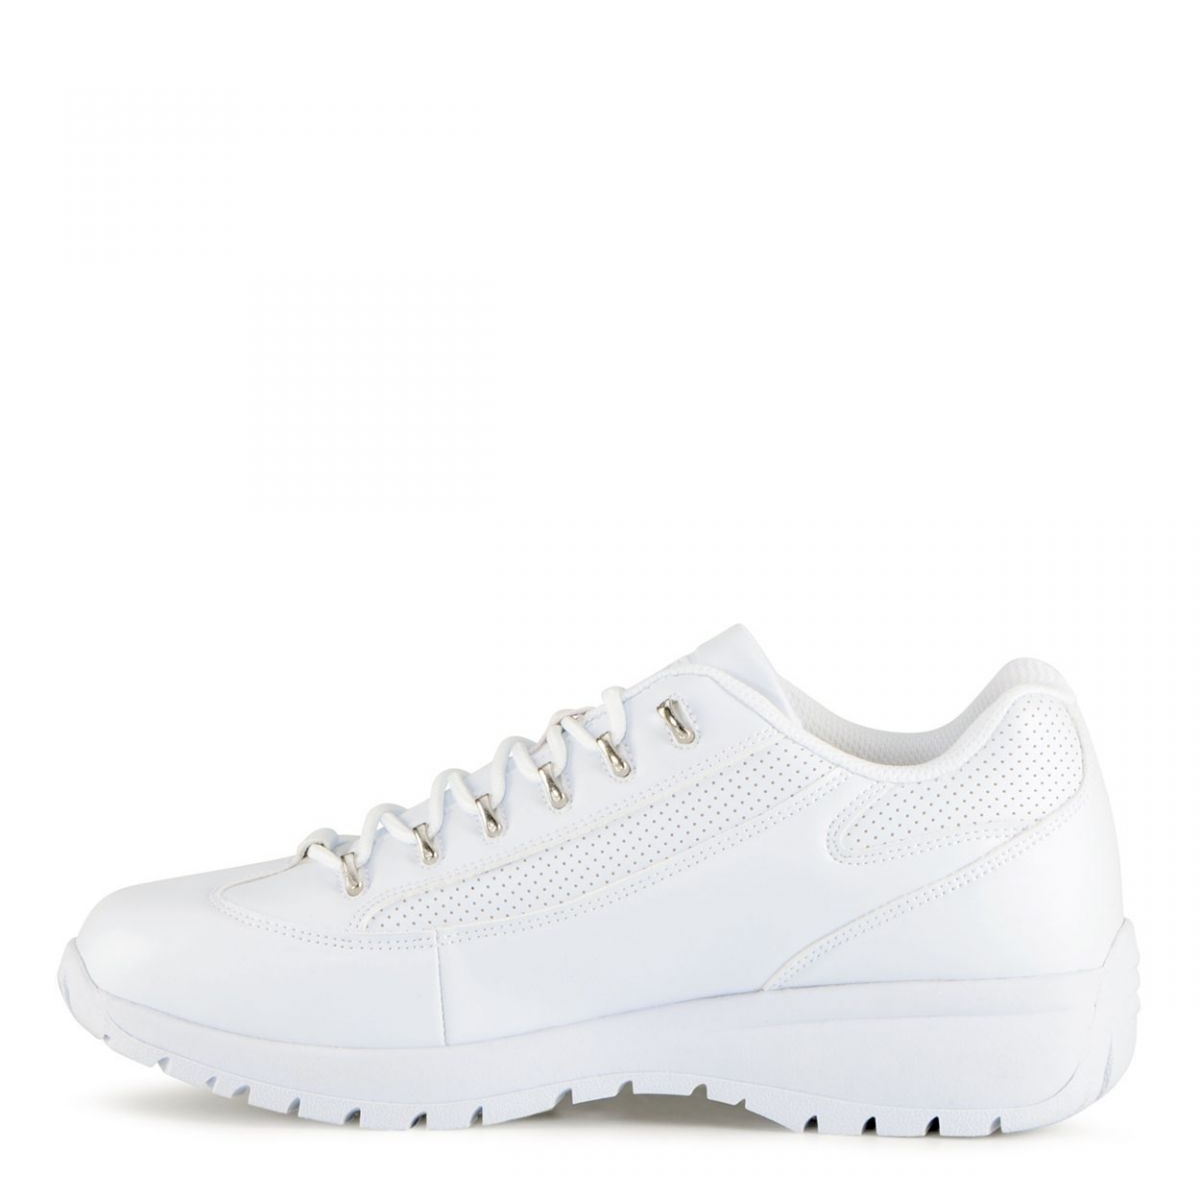 Lugz Men's Express Sneaker White - MEXPRSPV-100 WHITE - WHITE, 8.5